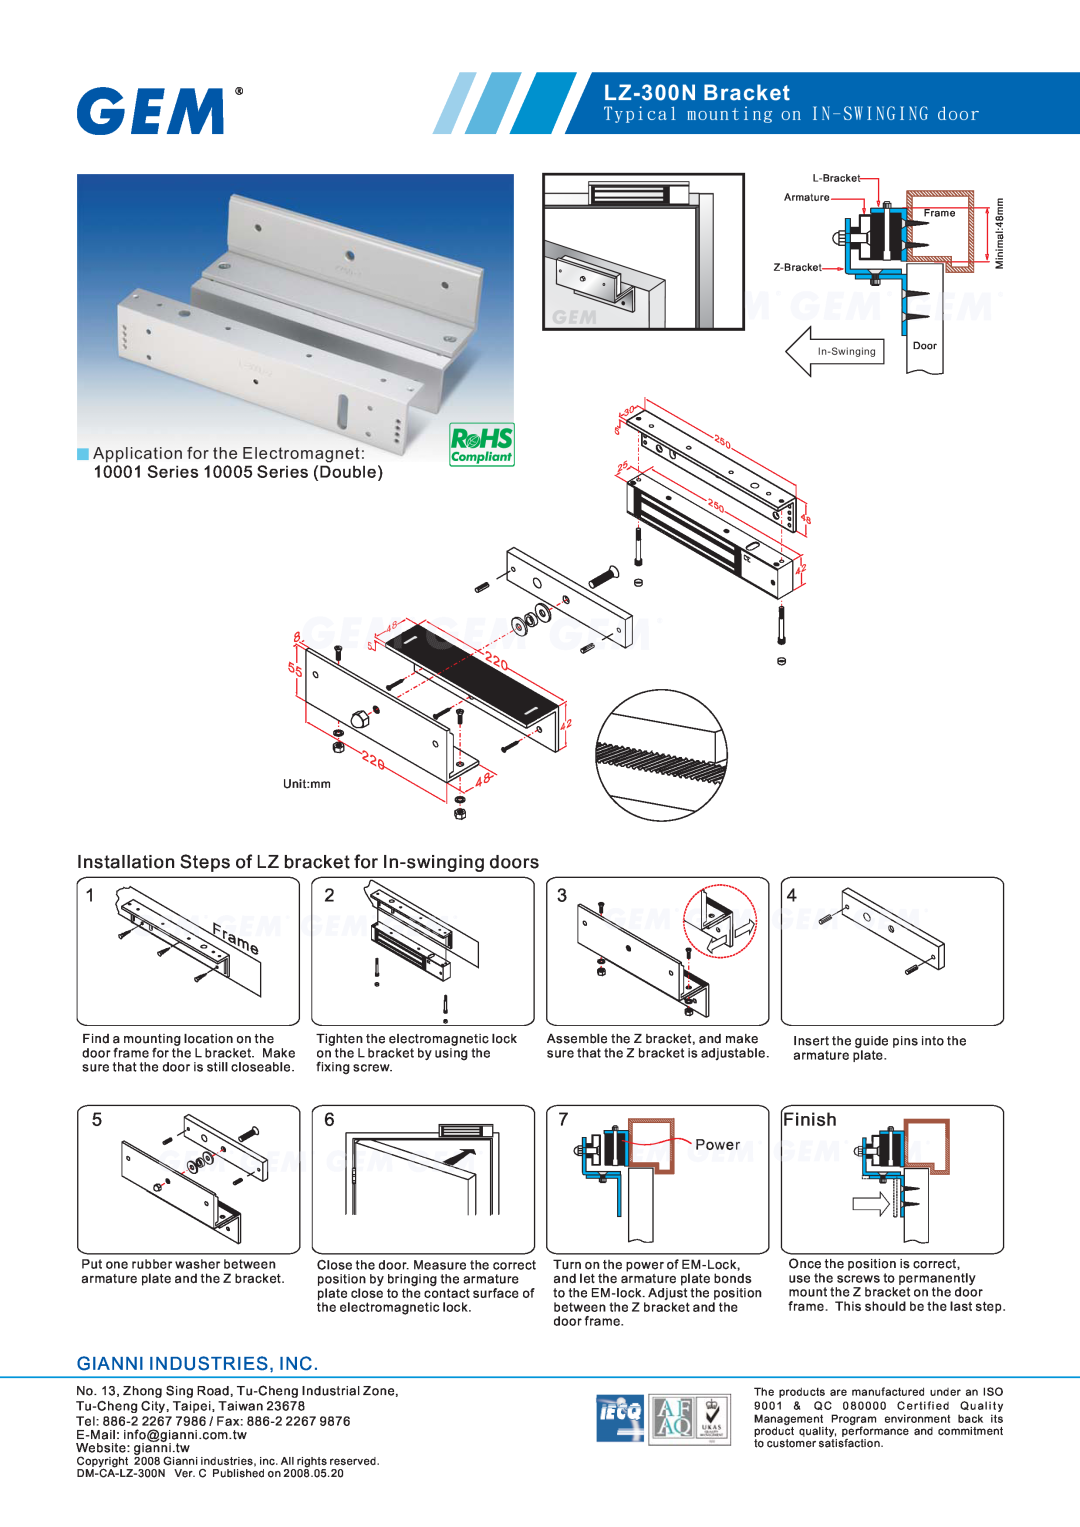 Gianni Industries manual LZ-300N Bracket, Installation Steps of LZ bracket for In-swinging doors, Finish, Power 